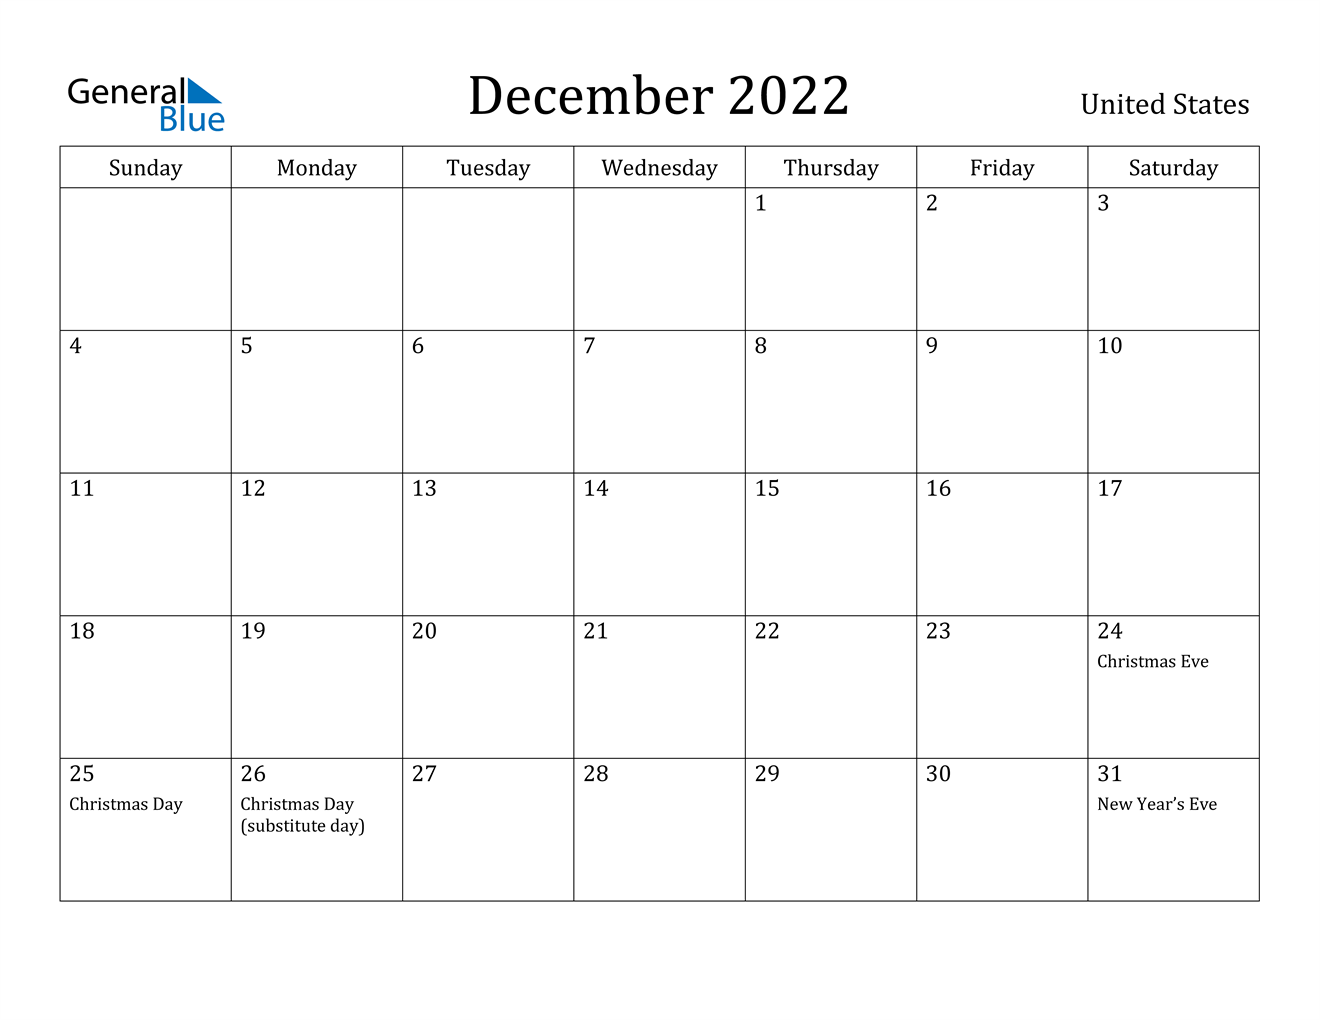 December 2022 Calendar - United States